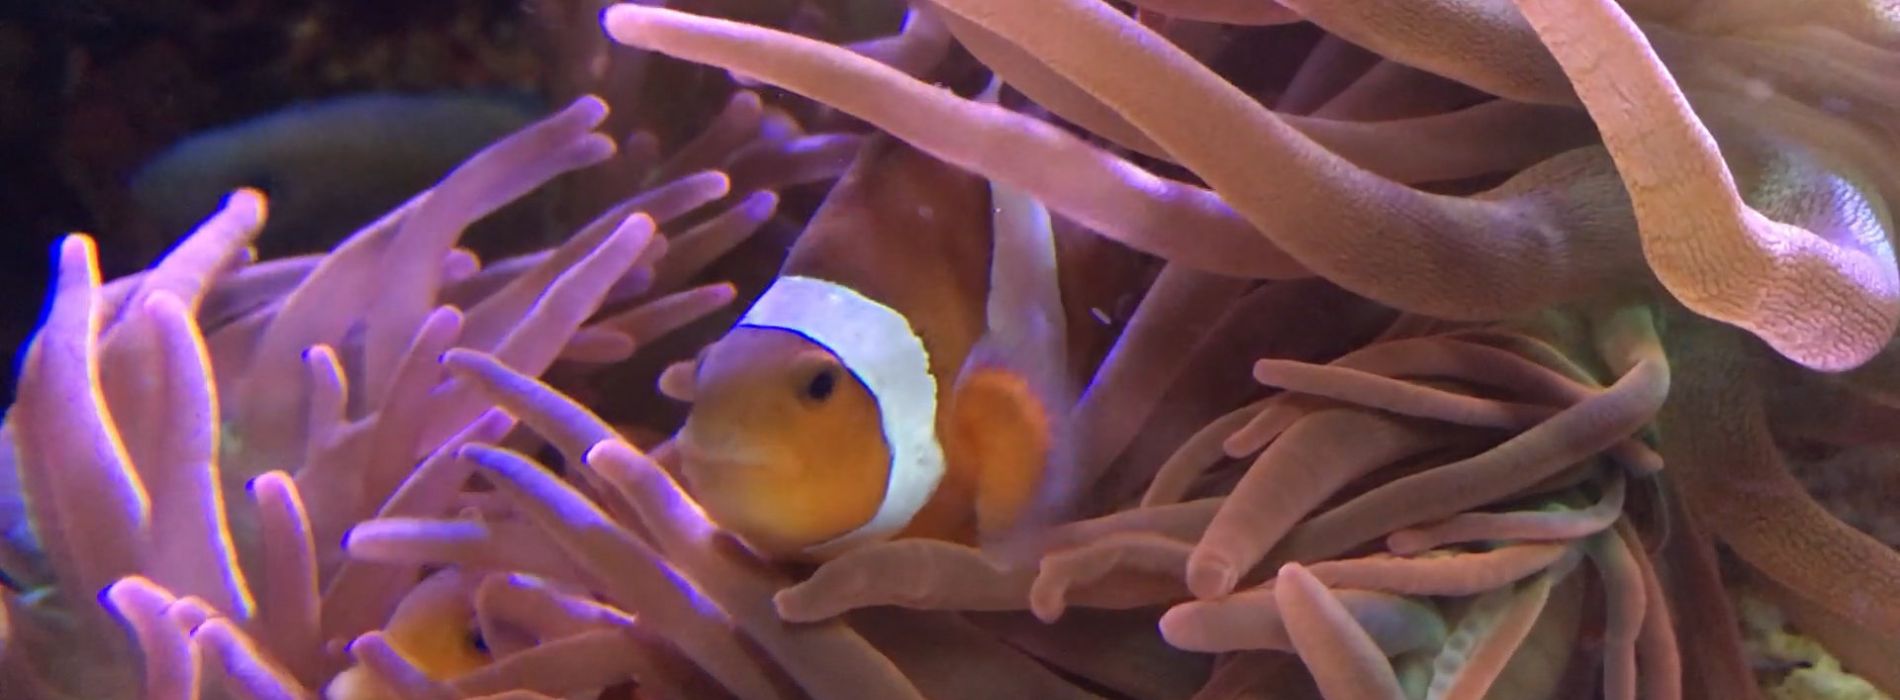 sea-anemones-eating-fish